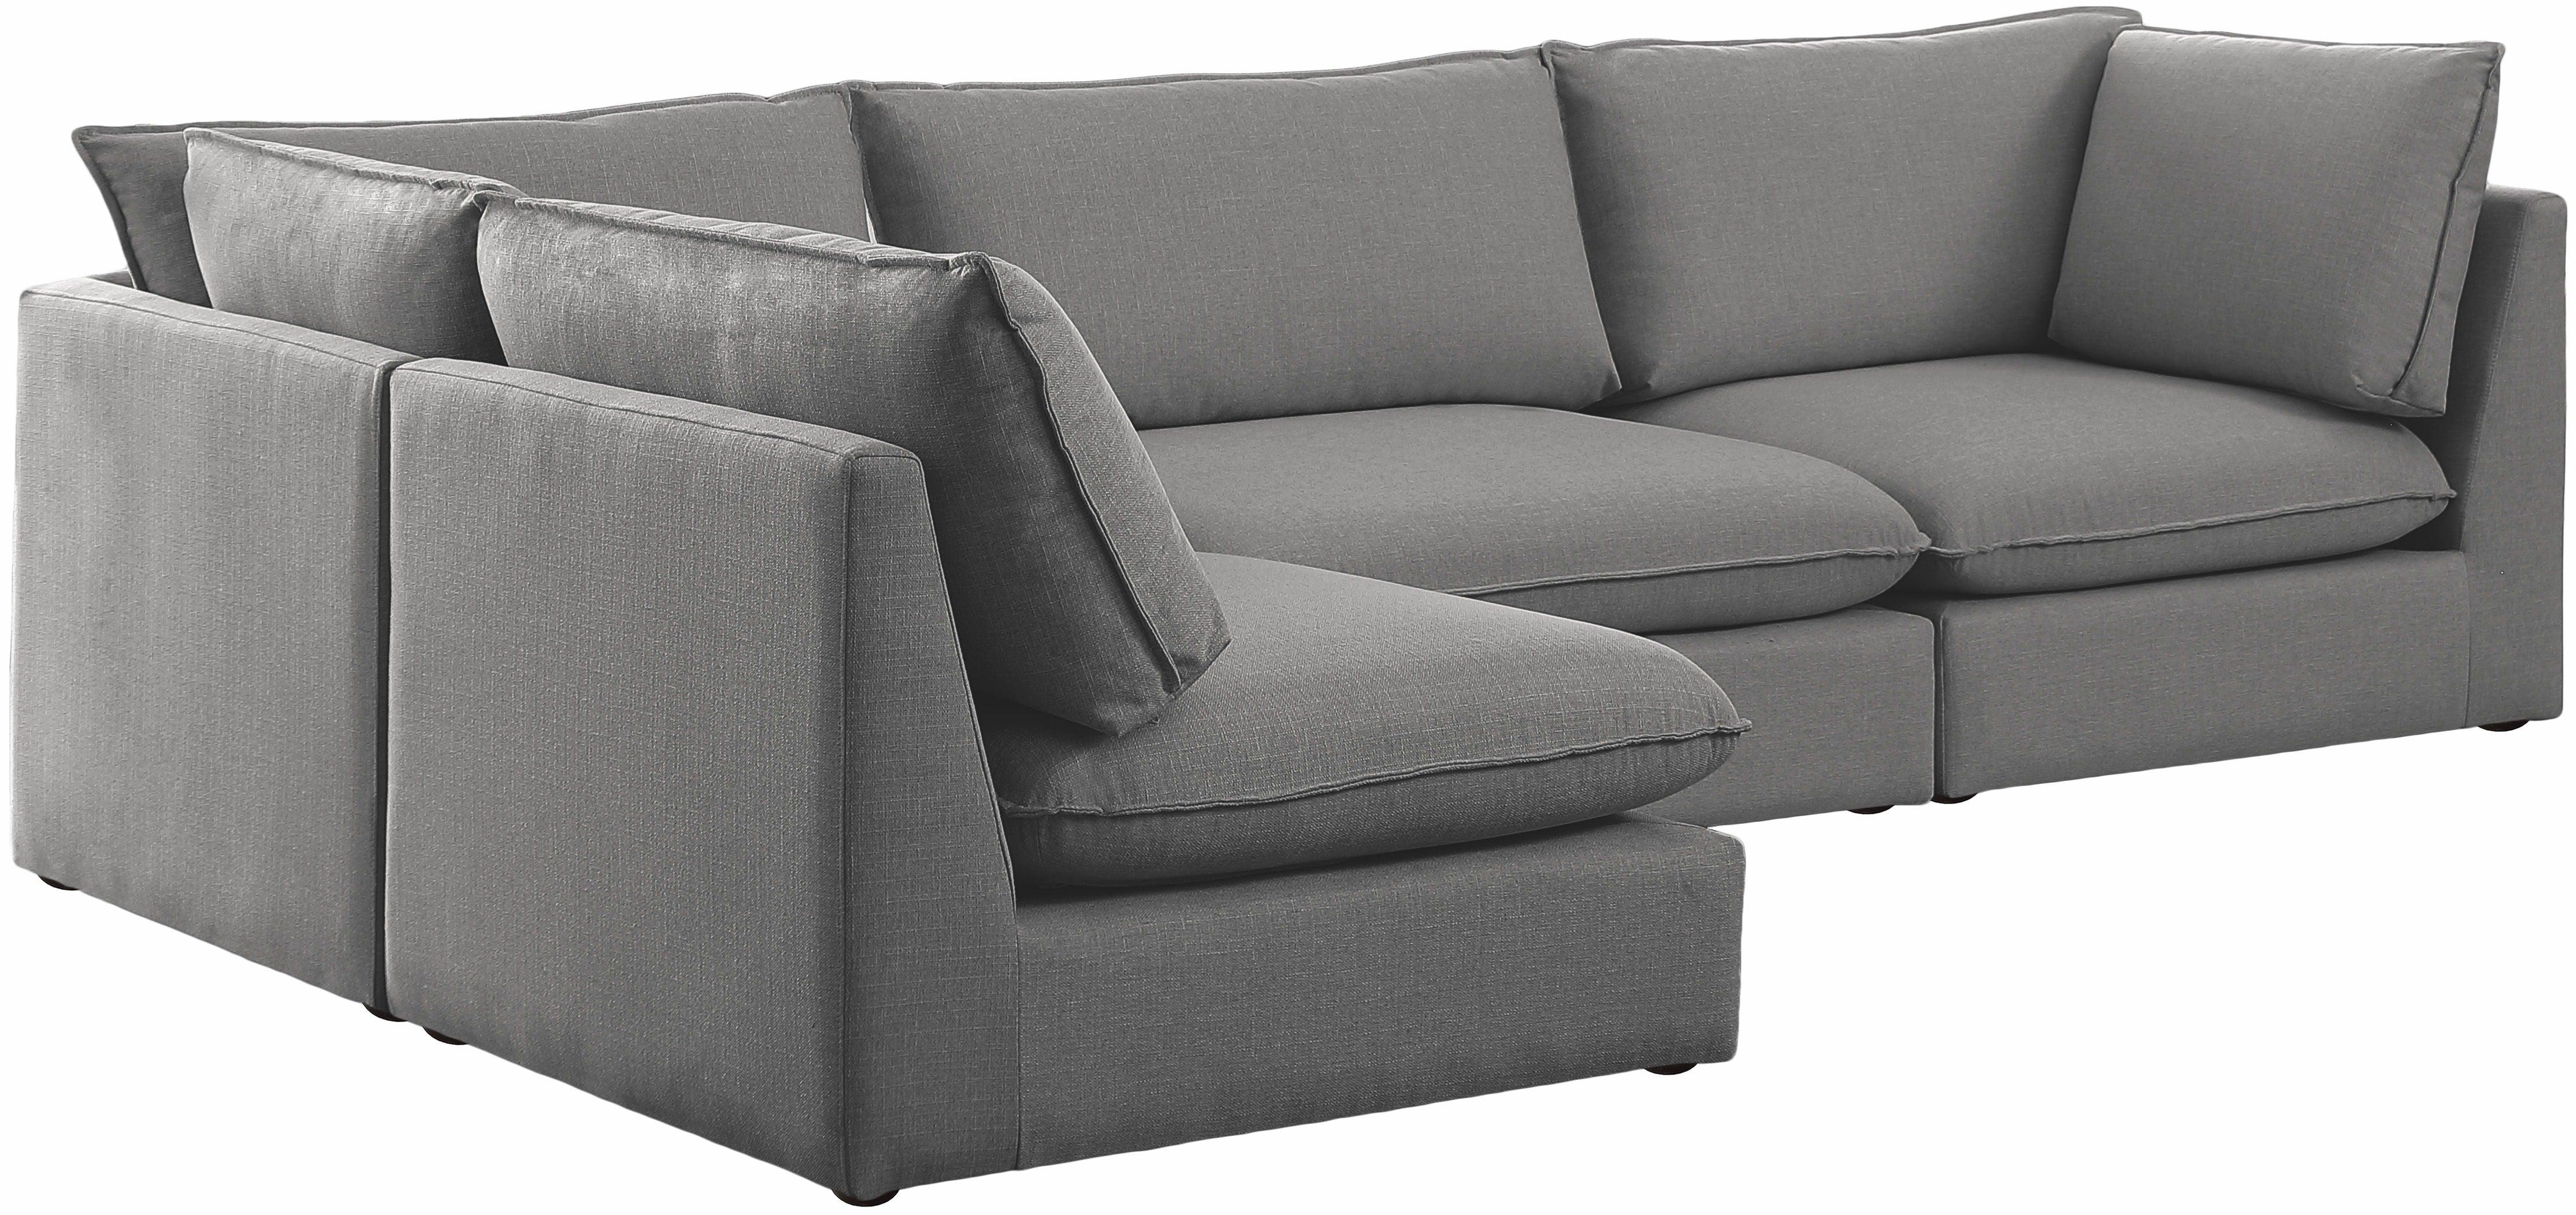 Meridian Furniture - Mackenzie - Modular Sectional 4 Piece - Gray - 5th Avenue Furniture